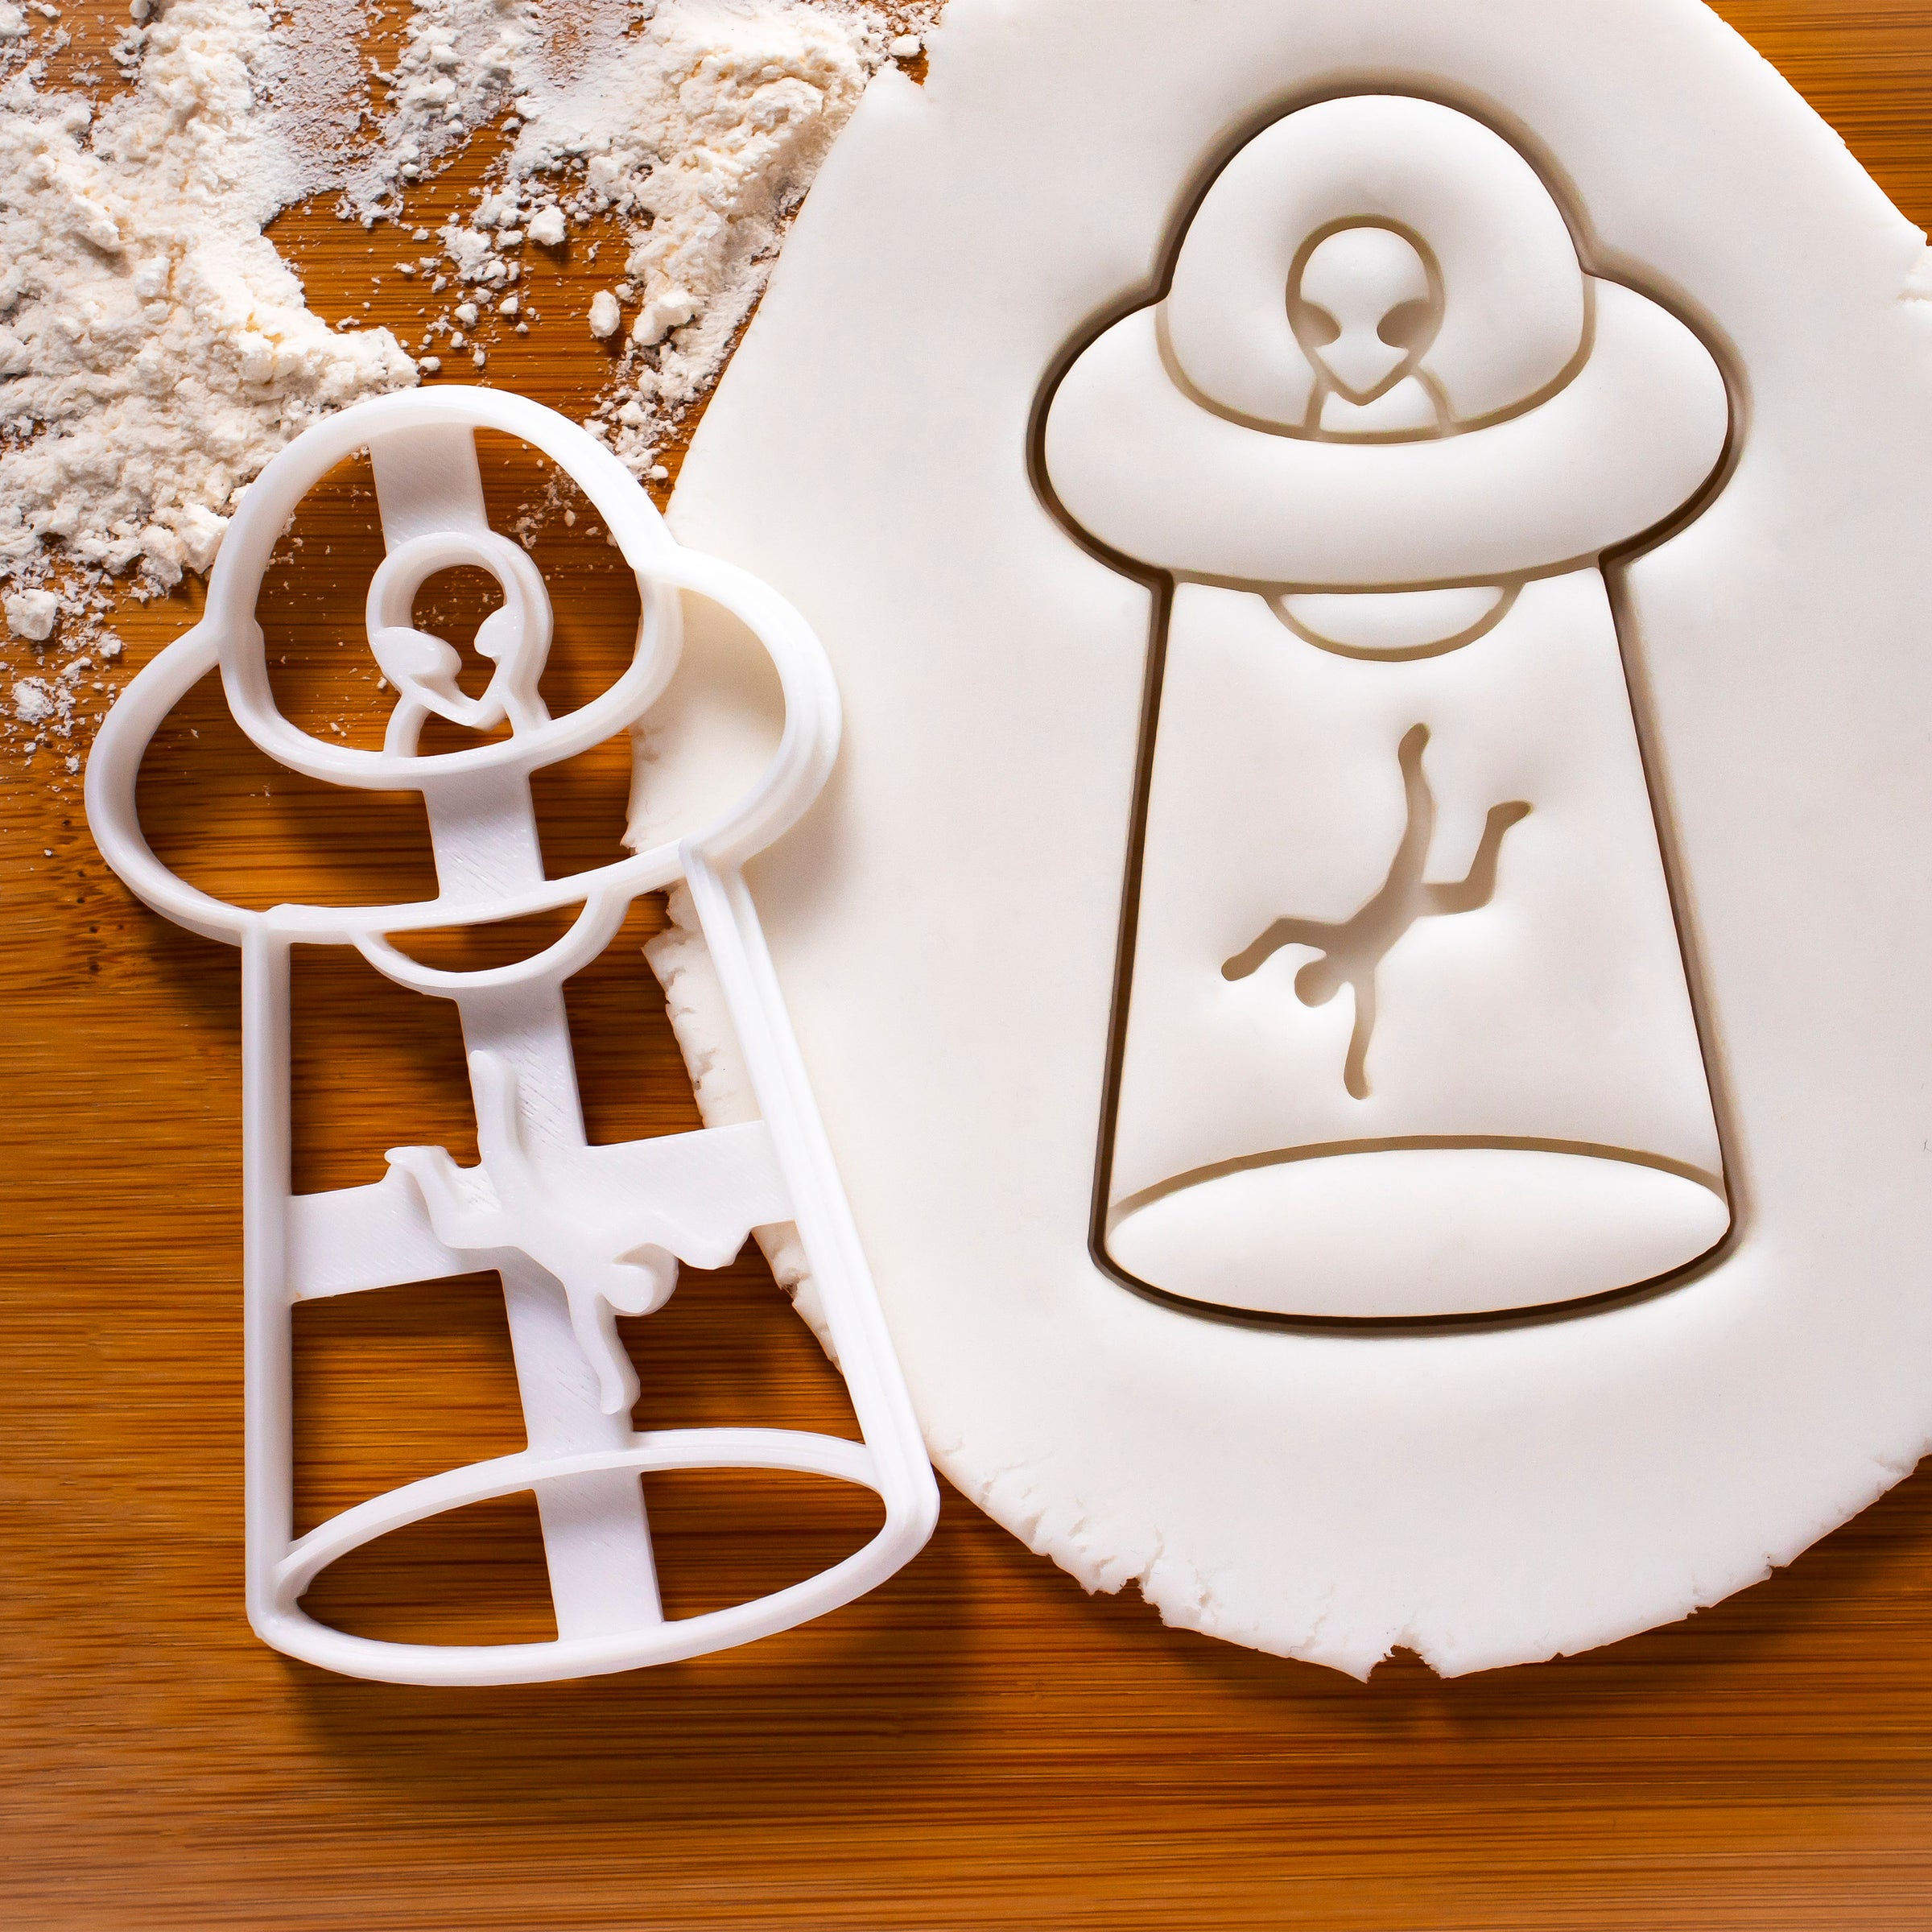 UFO Man Abduction Cookie Cutter